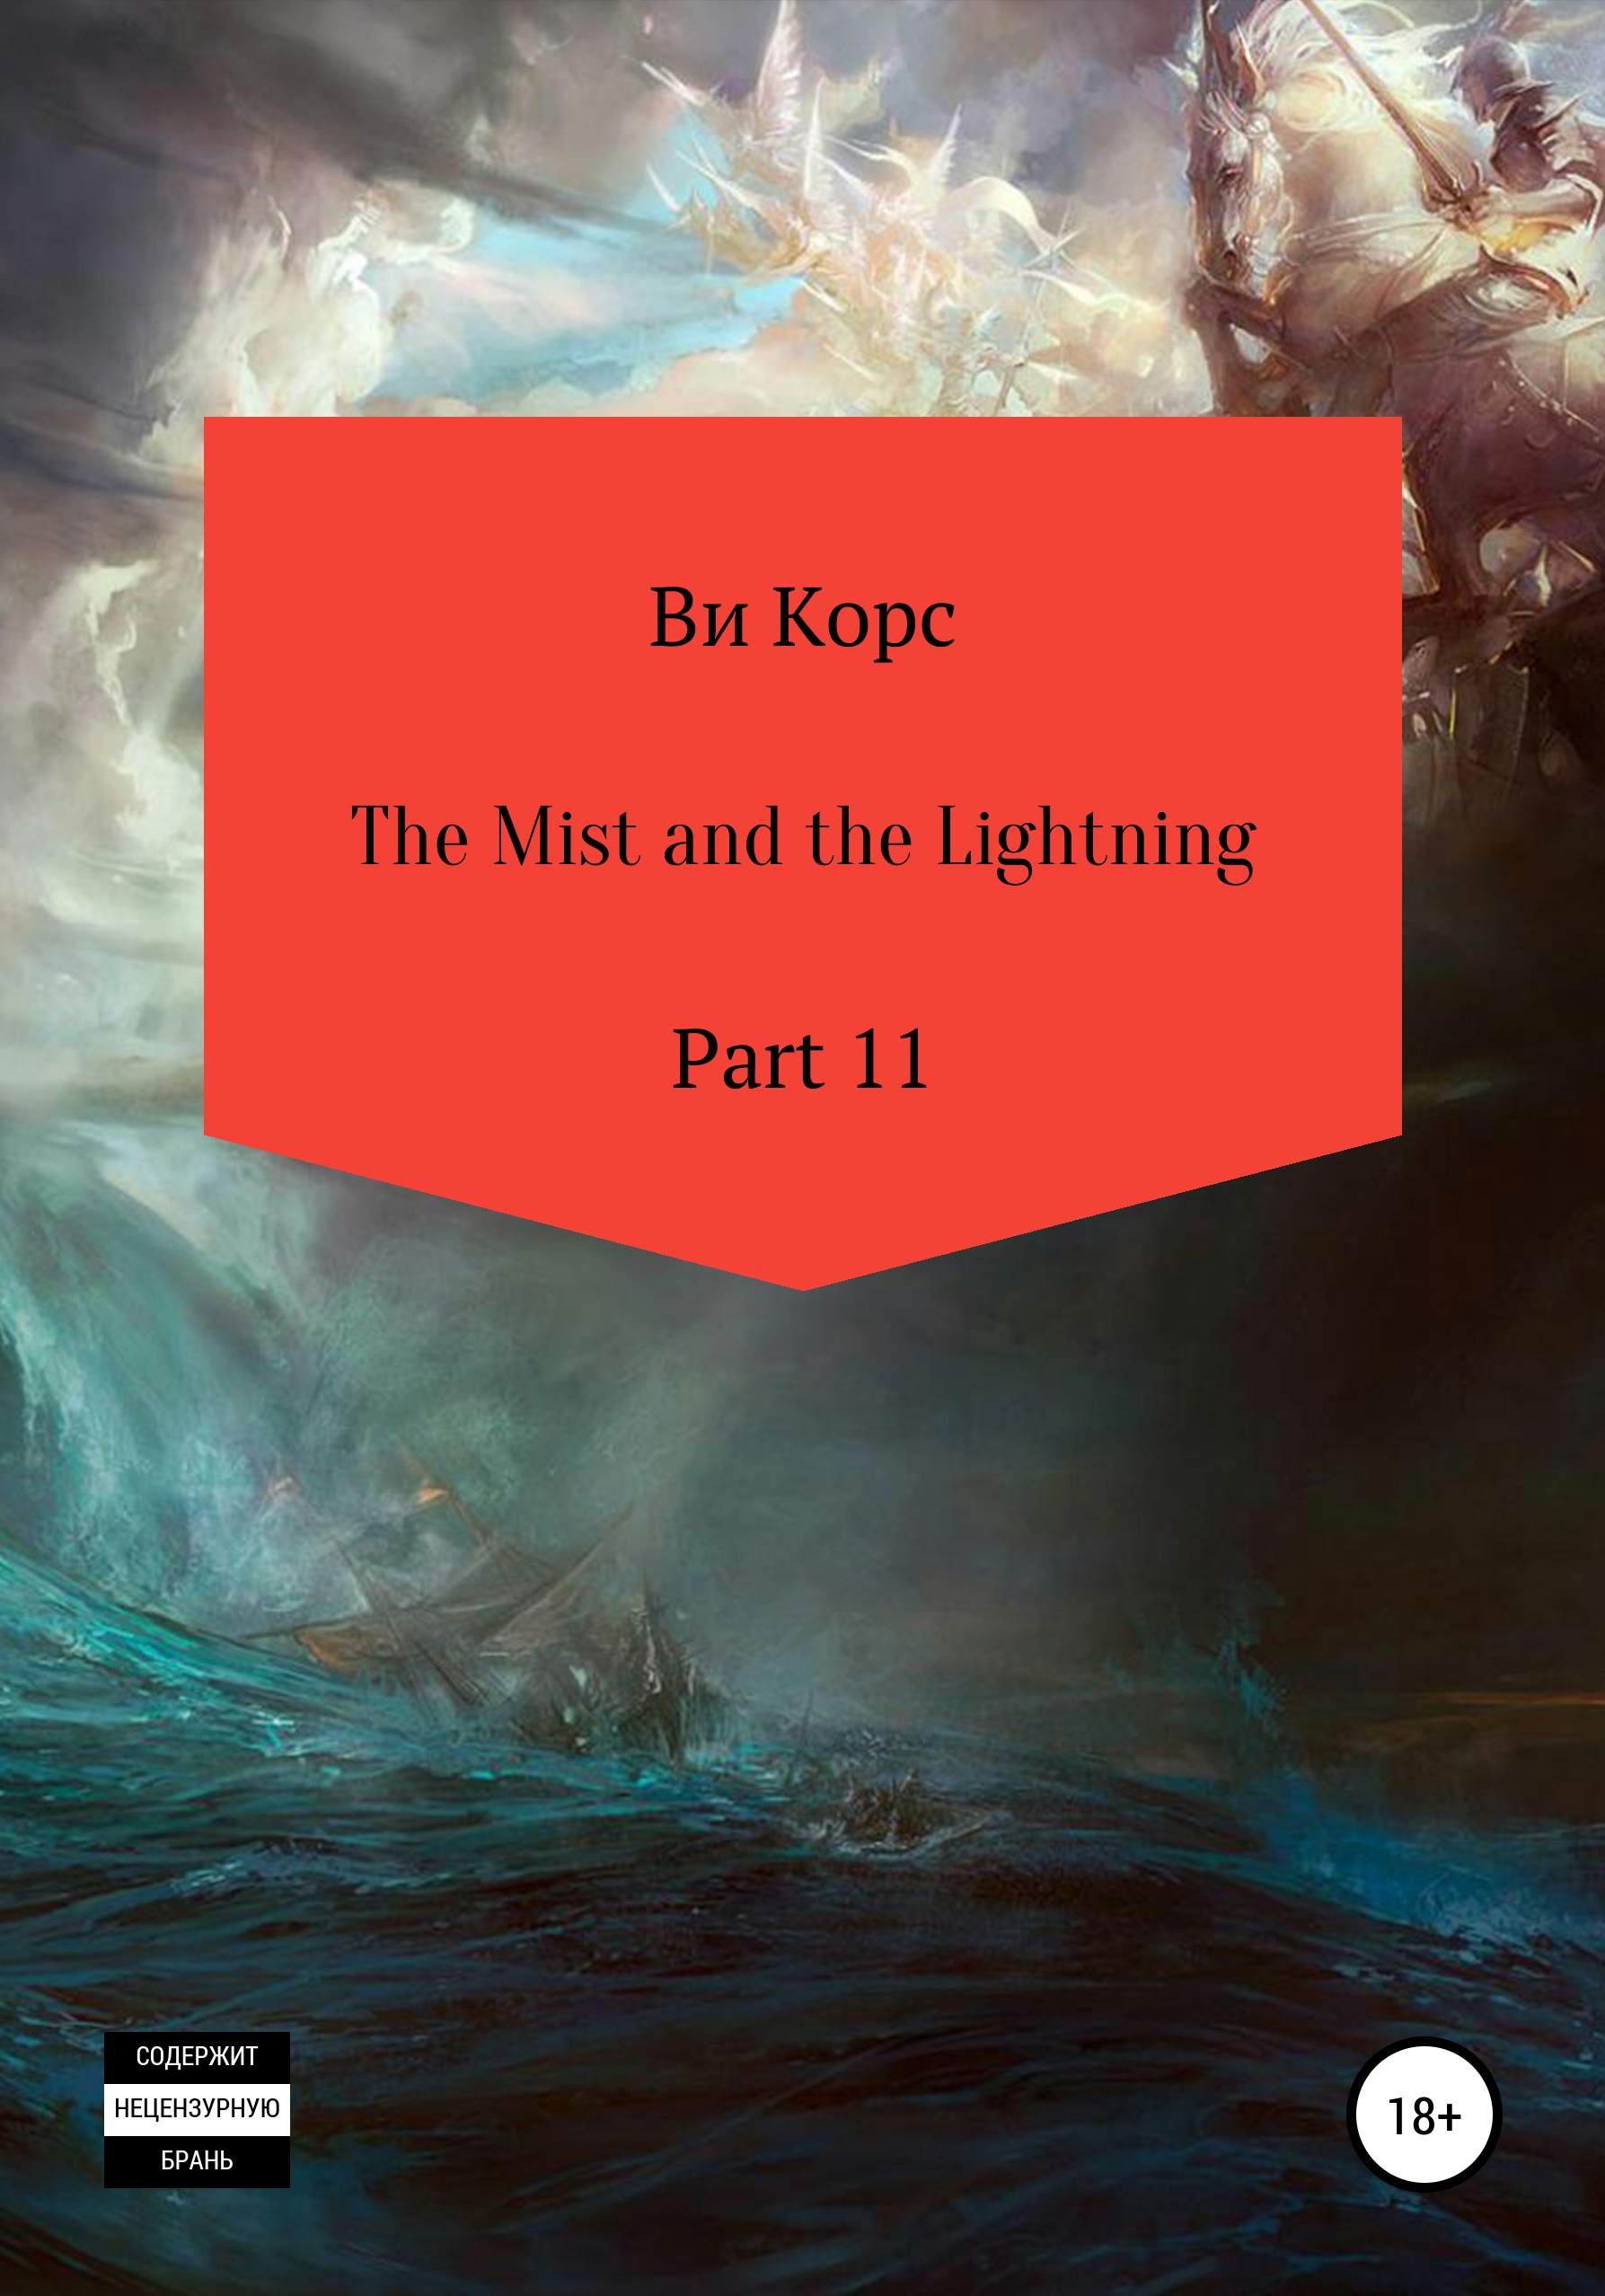 The Mist and the Lightning. Part 11 – Ви Корс